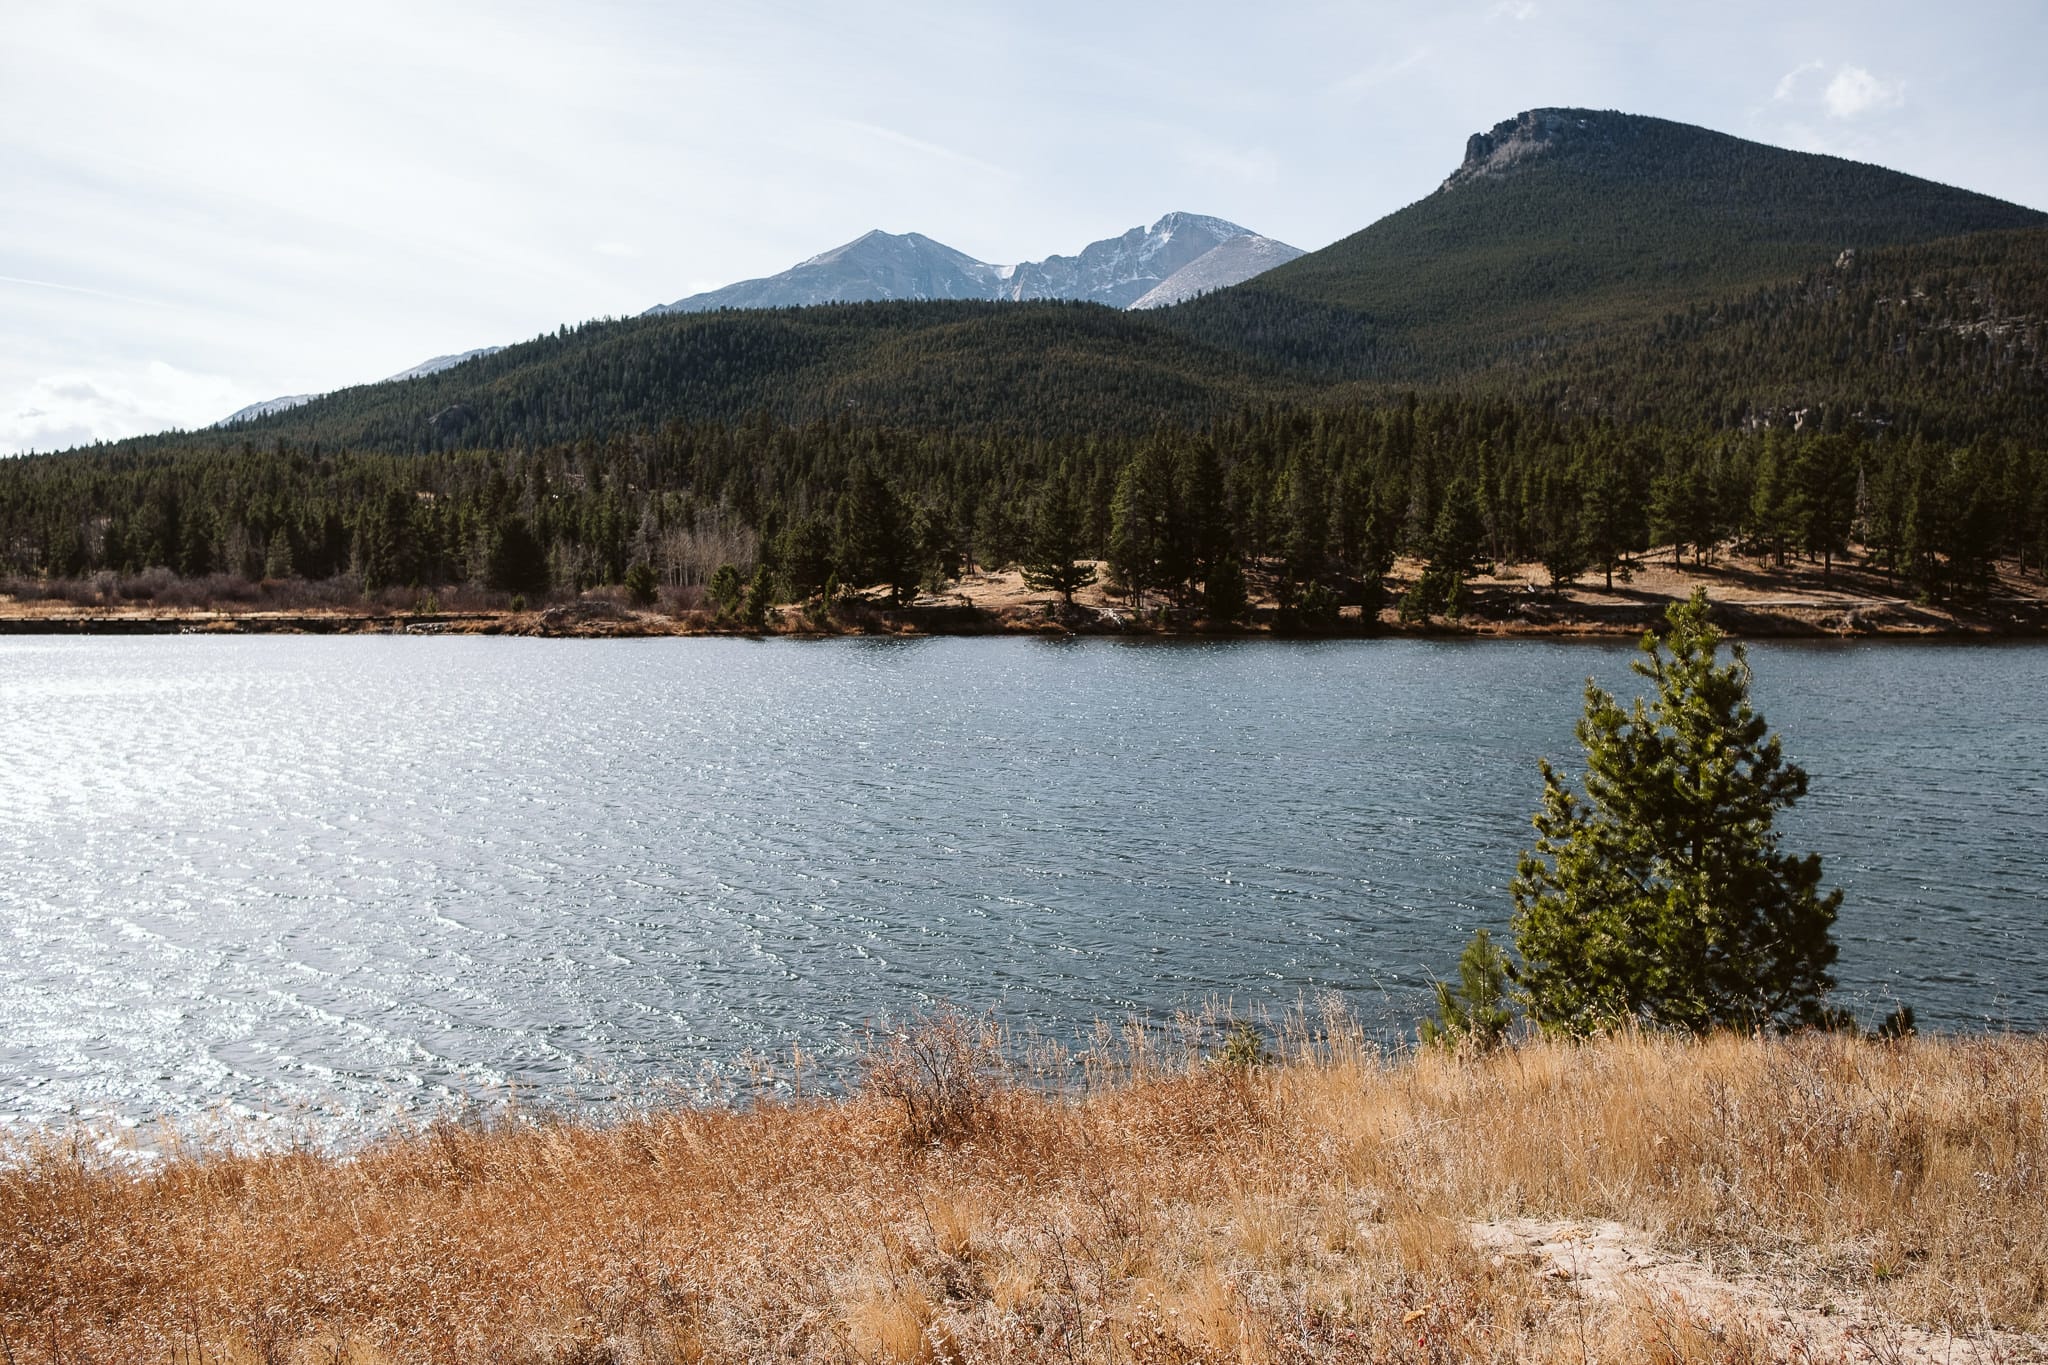 Lily Lake trail elopement site